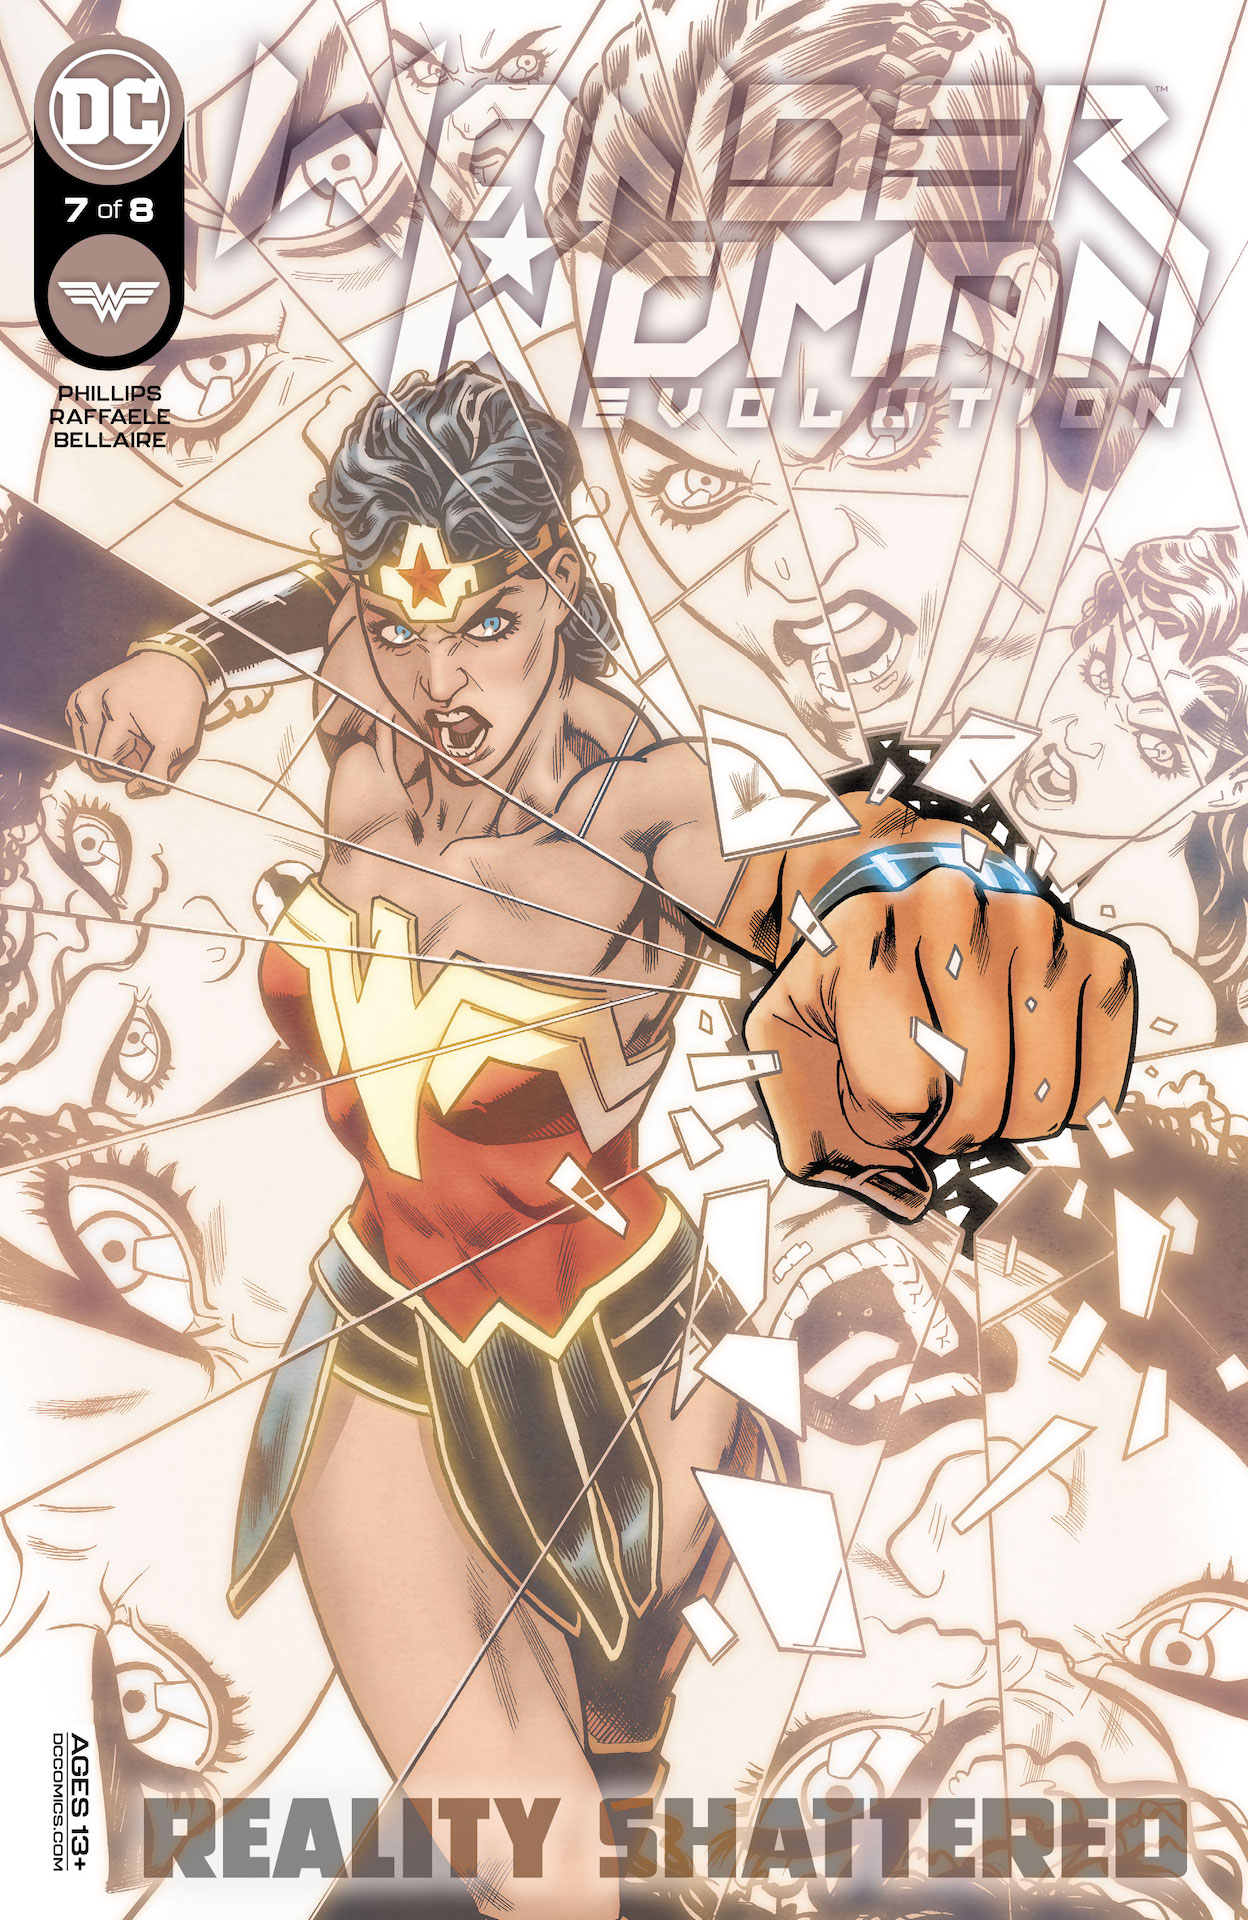 DC Preview: Wonder Woman: Evolution #7